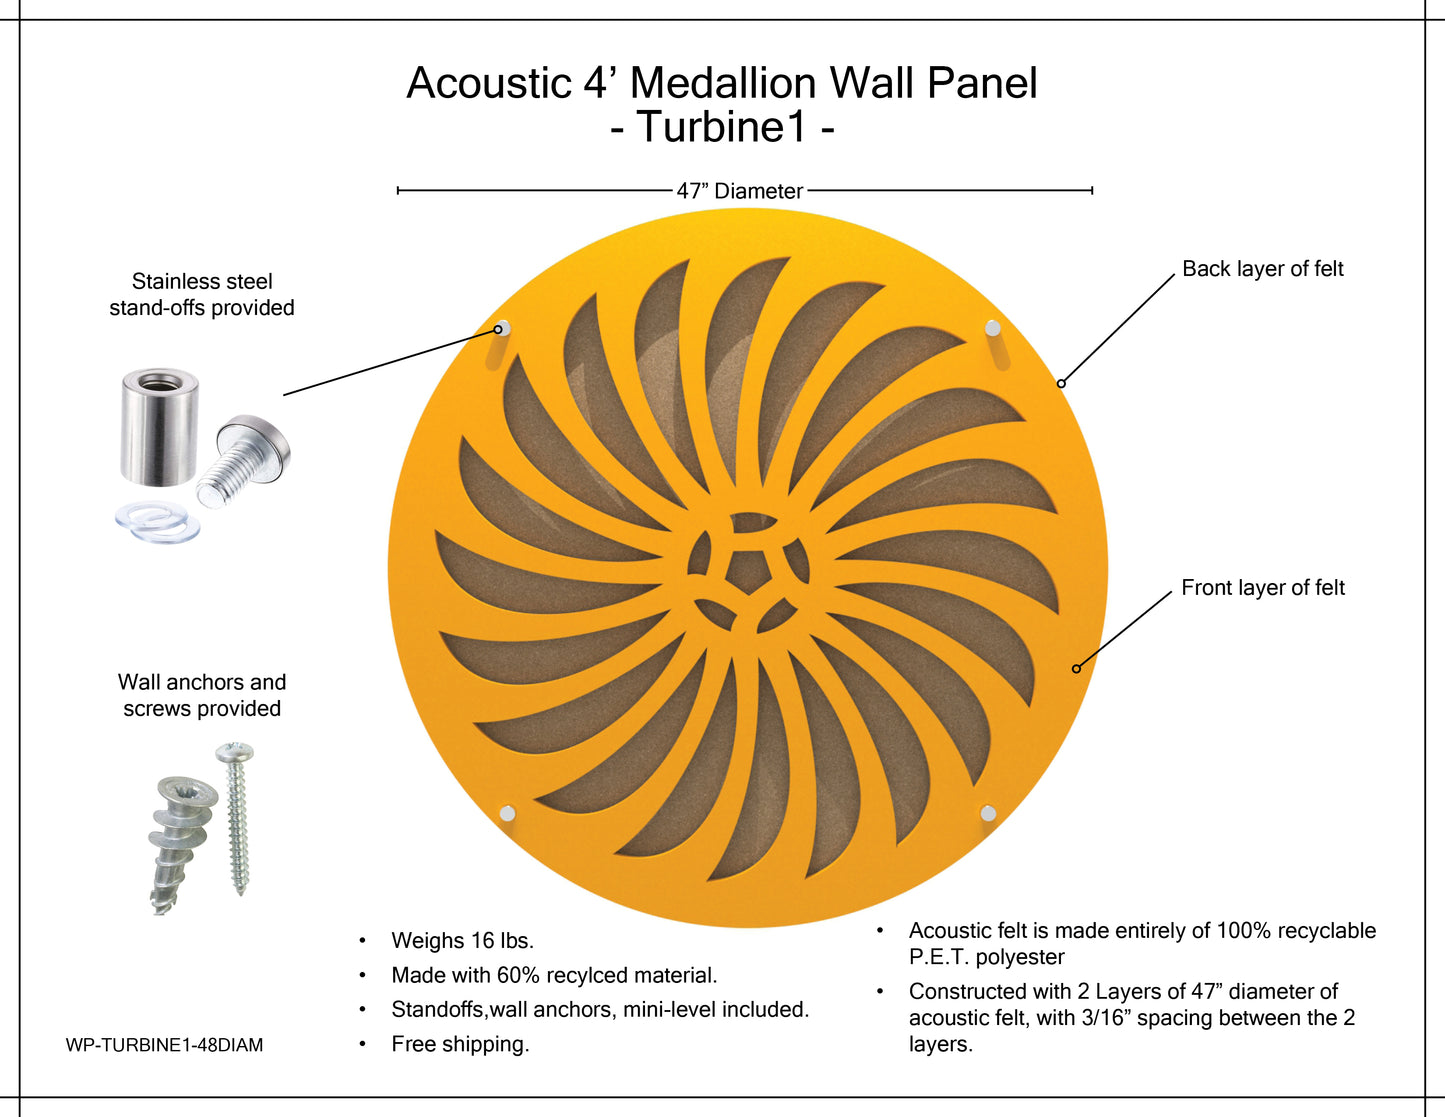 Medallion Acoustic Wall Panel - Turbine1